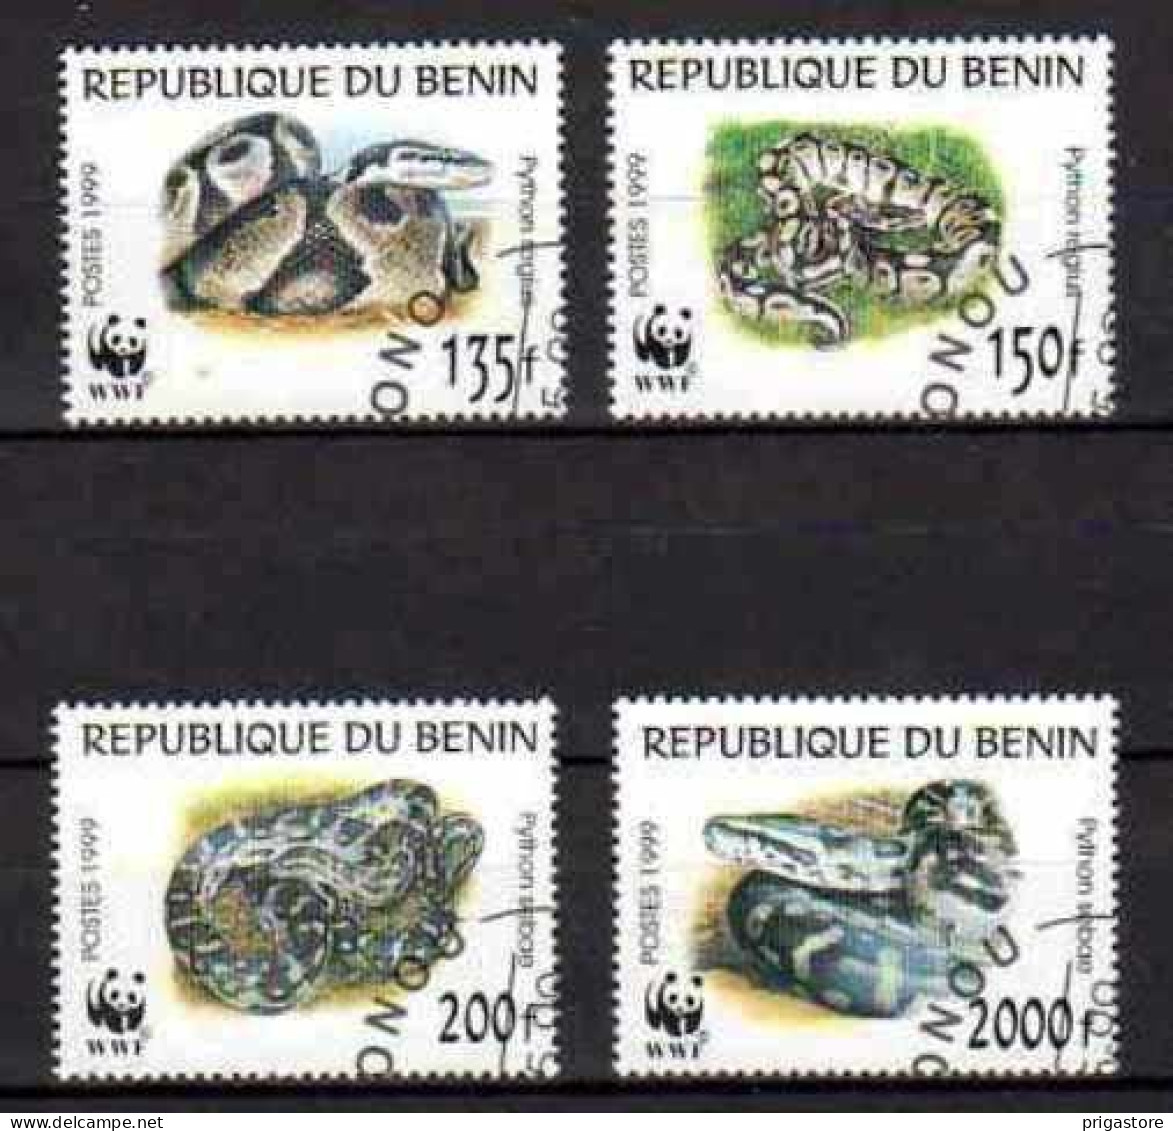 Animaux Serpents Bénin 1999 (40) Yvert N° 898 à 901 Oblitéré Used - Serpenti